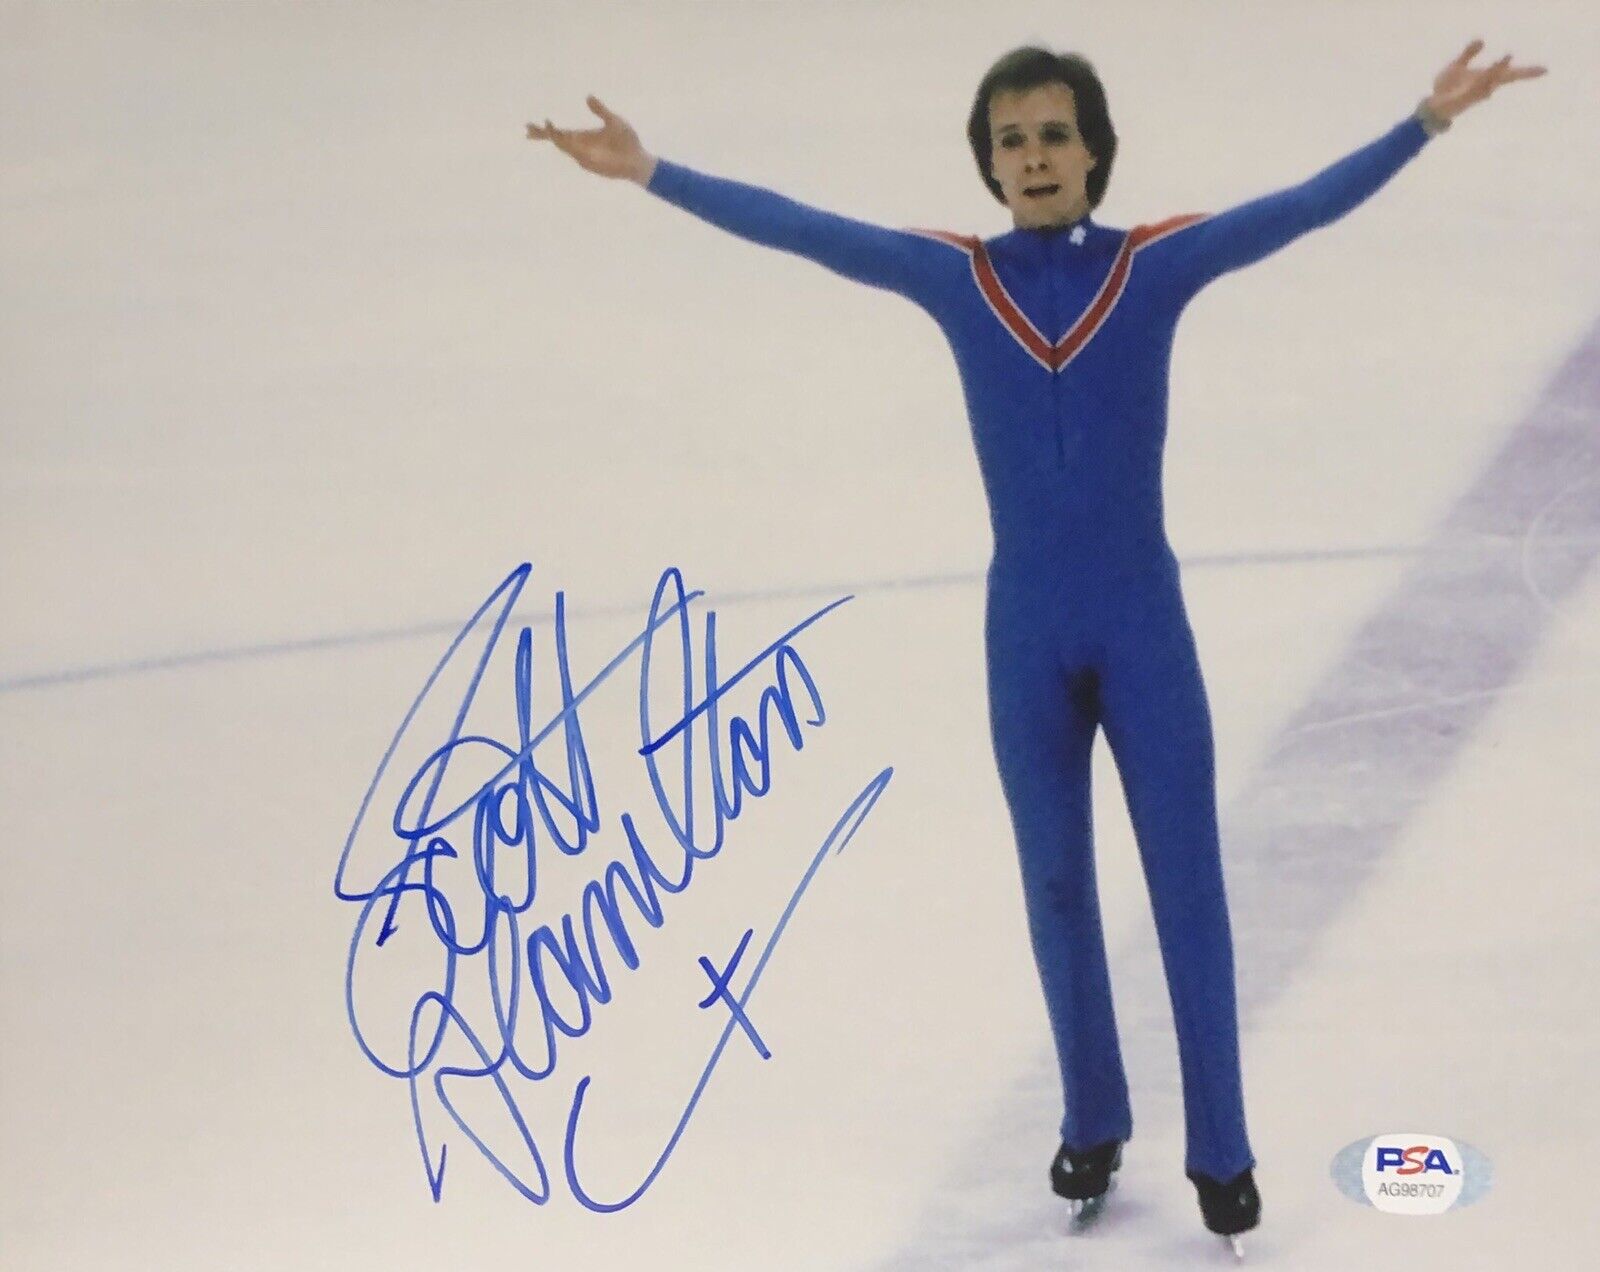 Scott Hamilton Signed Autographed US Figure Skating 8x10 Photo Poster painting Psa/Dna